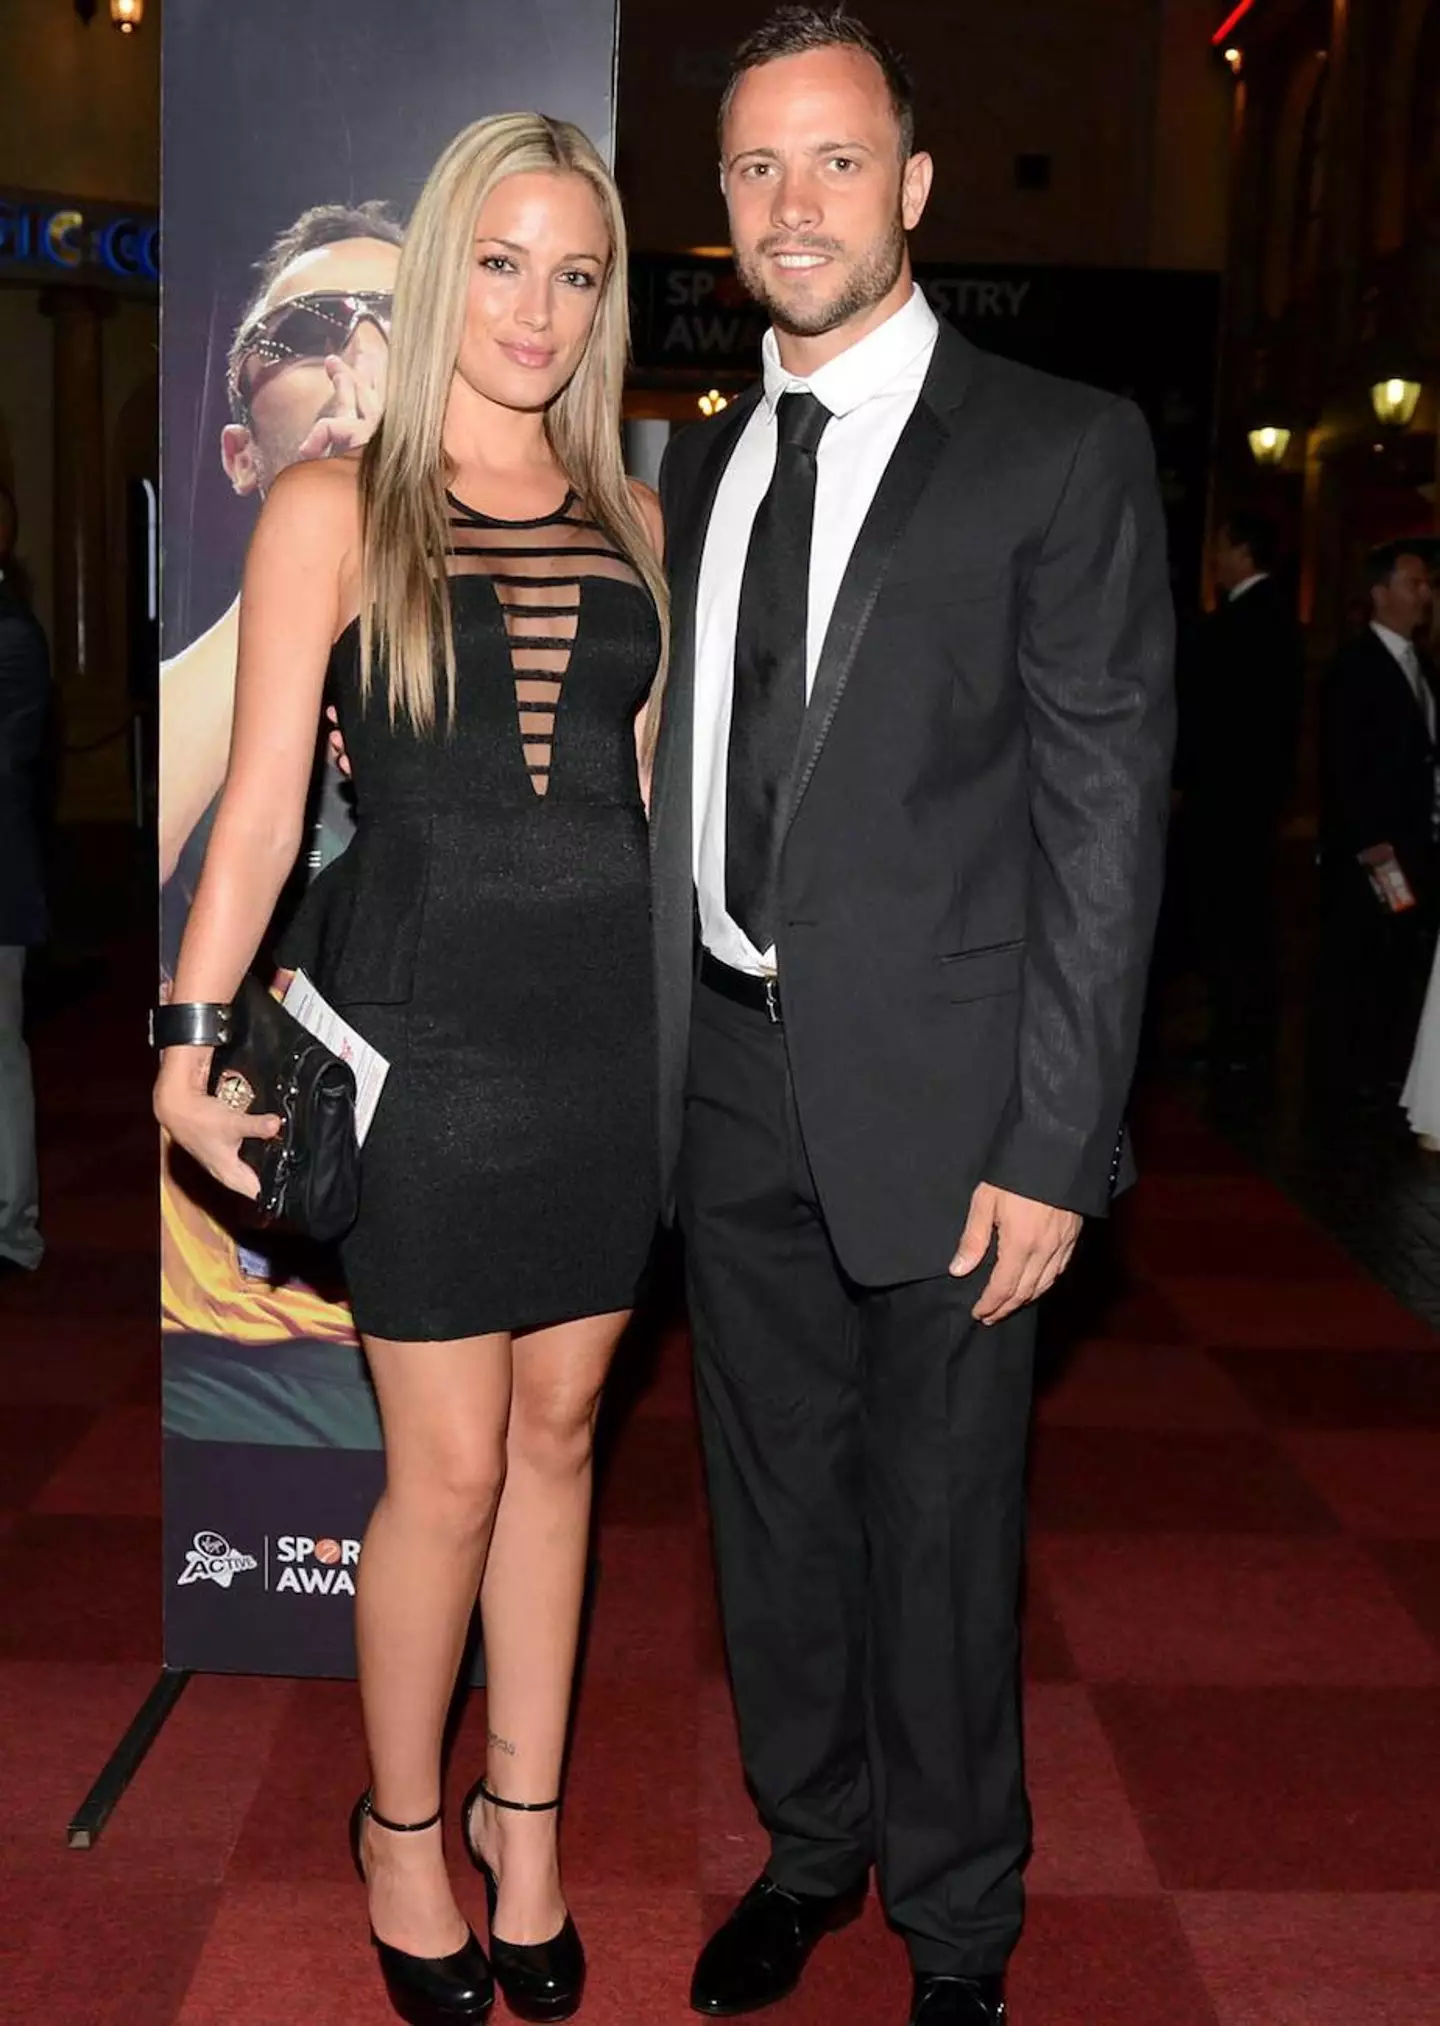 Oscar Pistorius fatally shot his former girlfriend Reeva Steenkamp nine years ago.